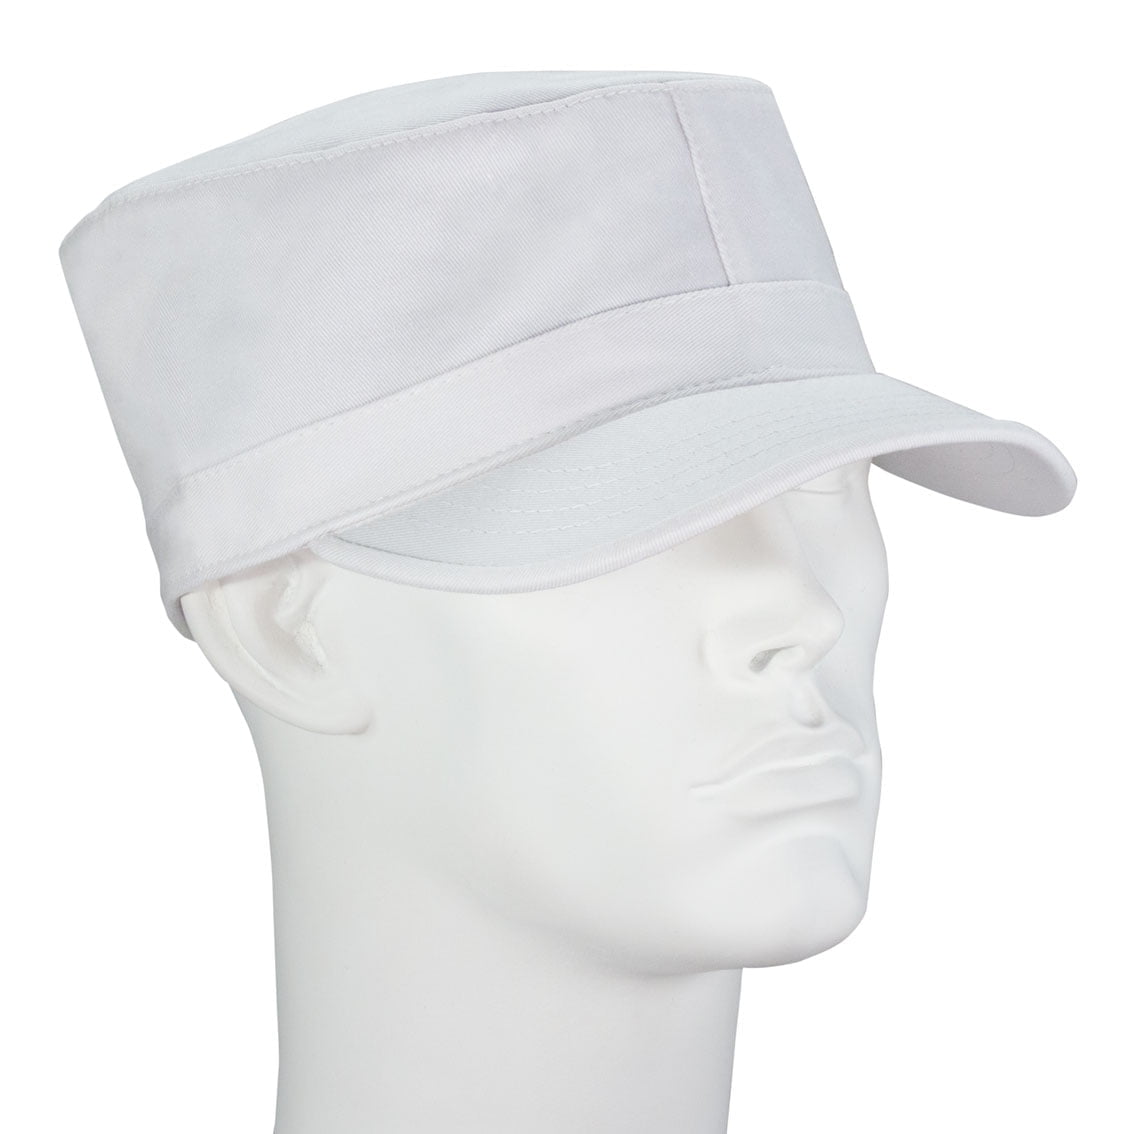 12pcs White Plain Castro Military Fatigue Army Hats - Fitted - Unconstructed - 100% Cotton - Bulk by the Dozen - Wholesale